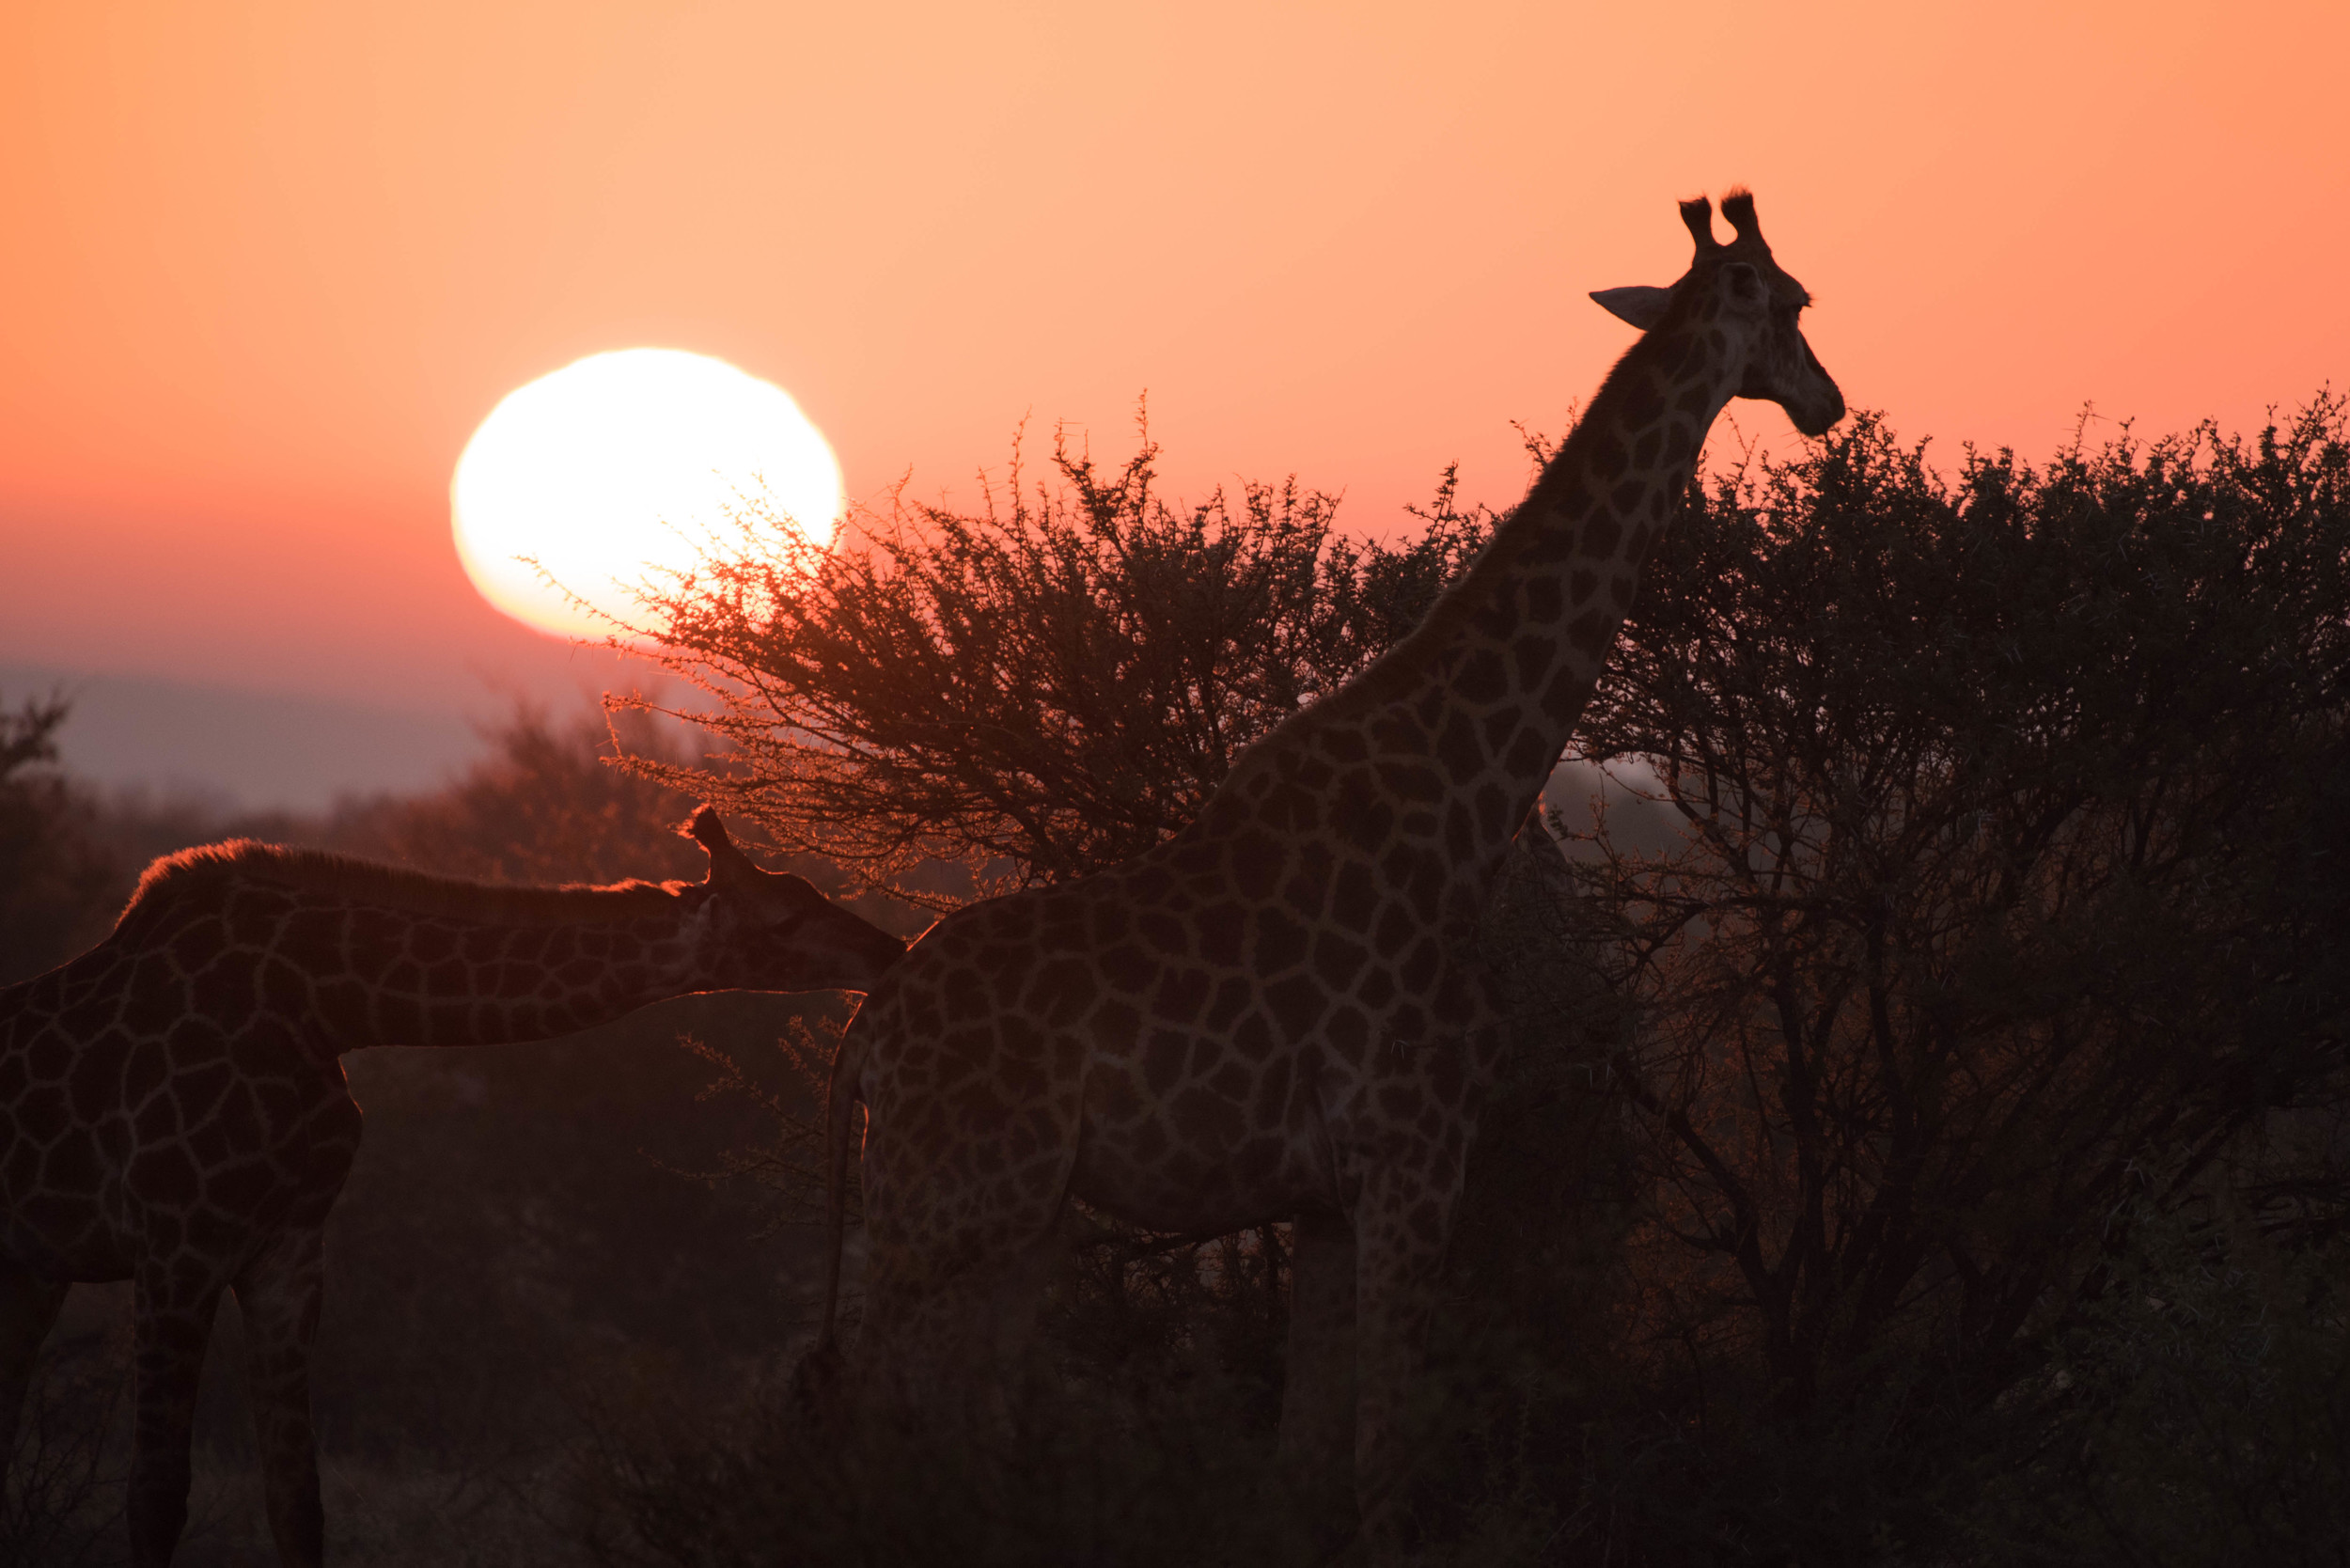 Giraffes at sunrise, Madikwe Game Reserve, South Africa